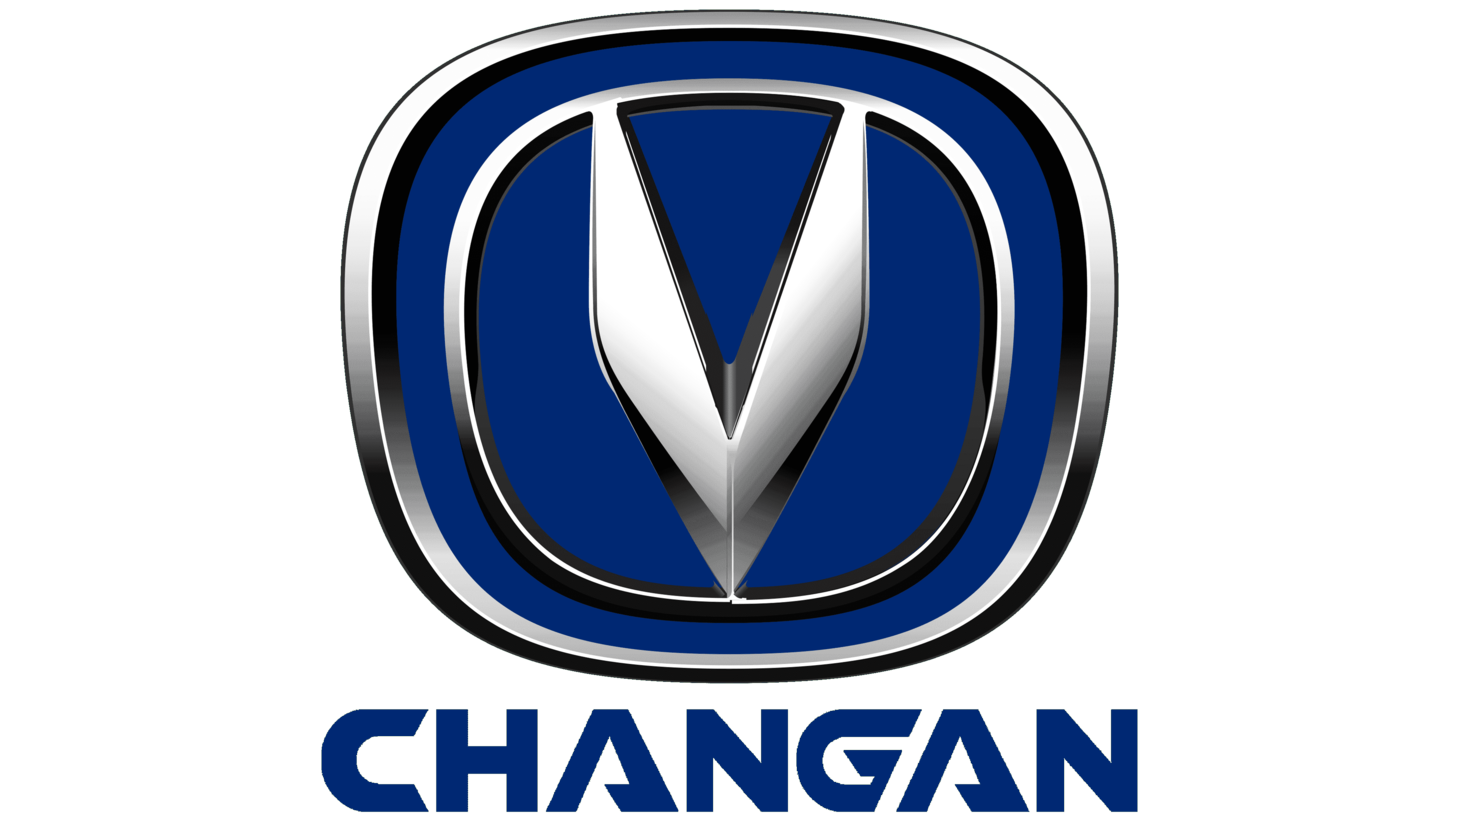 Changan symbol